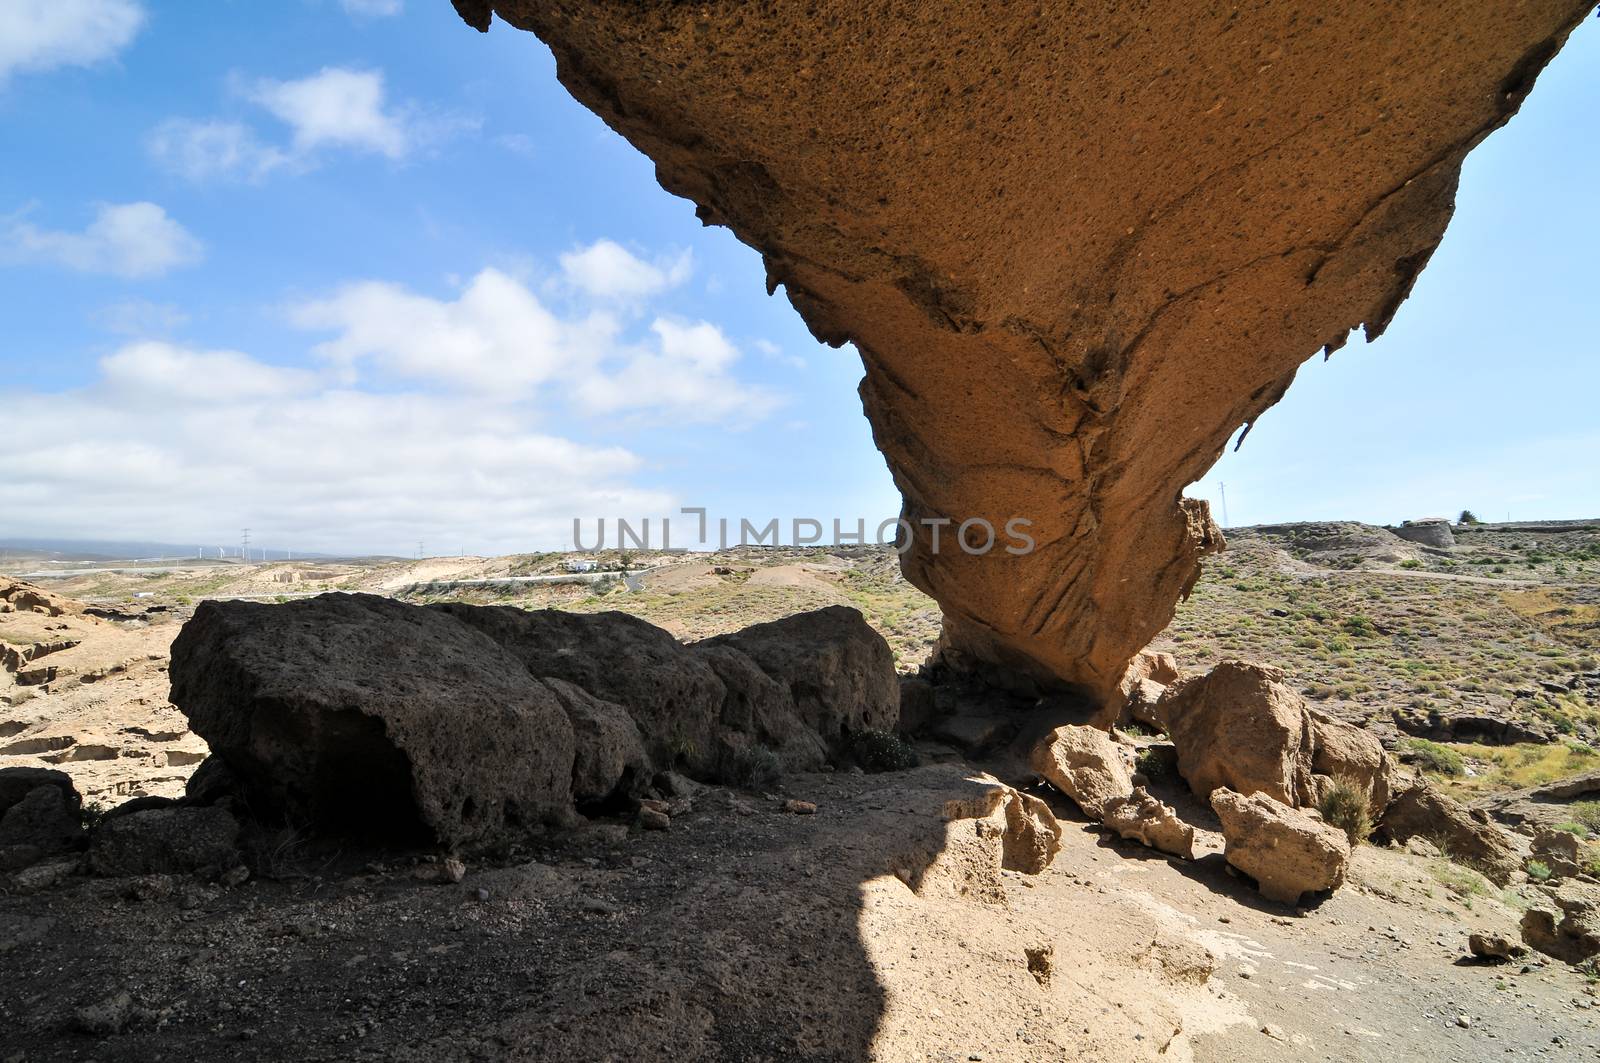 dry landscape by underworld